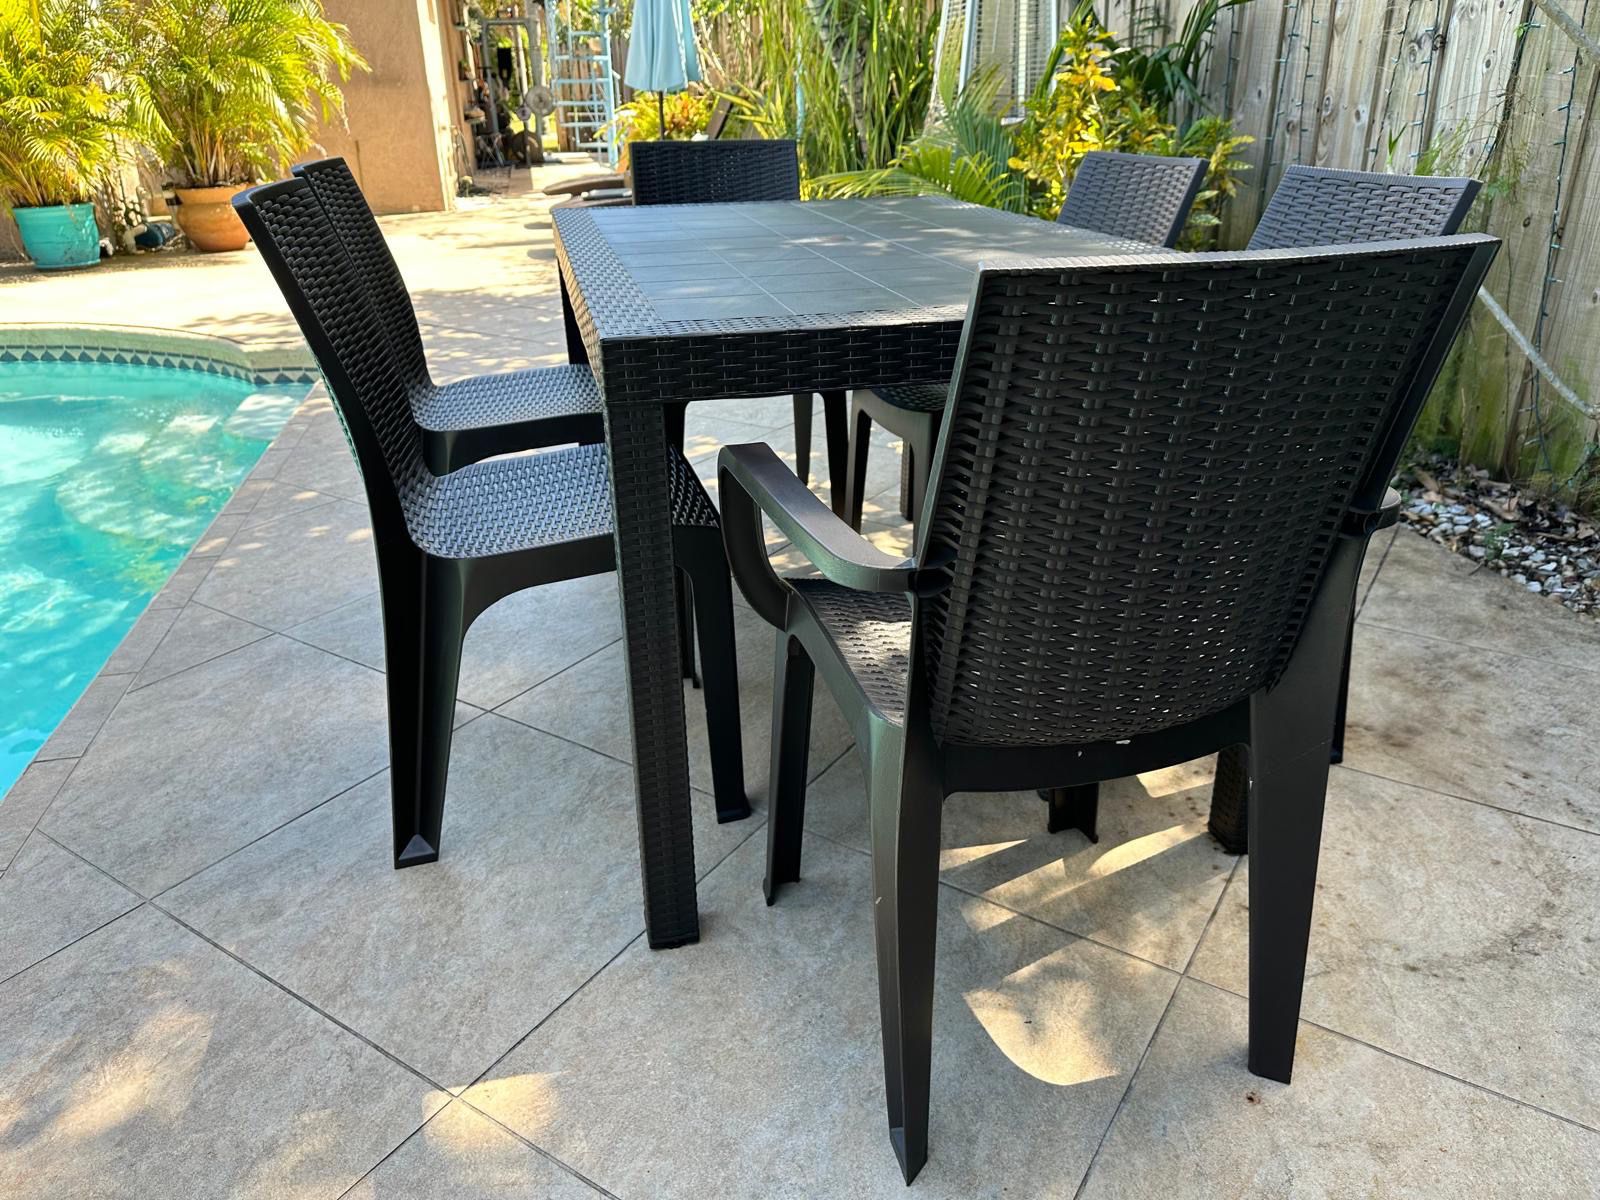 outdoor Furniture/patio furniture set/Outdoor dining set/patio dining set/patio set/comedor de patio